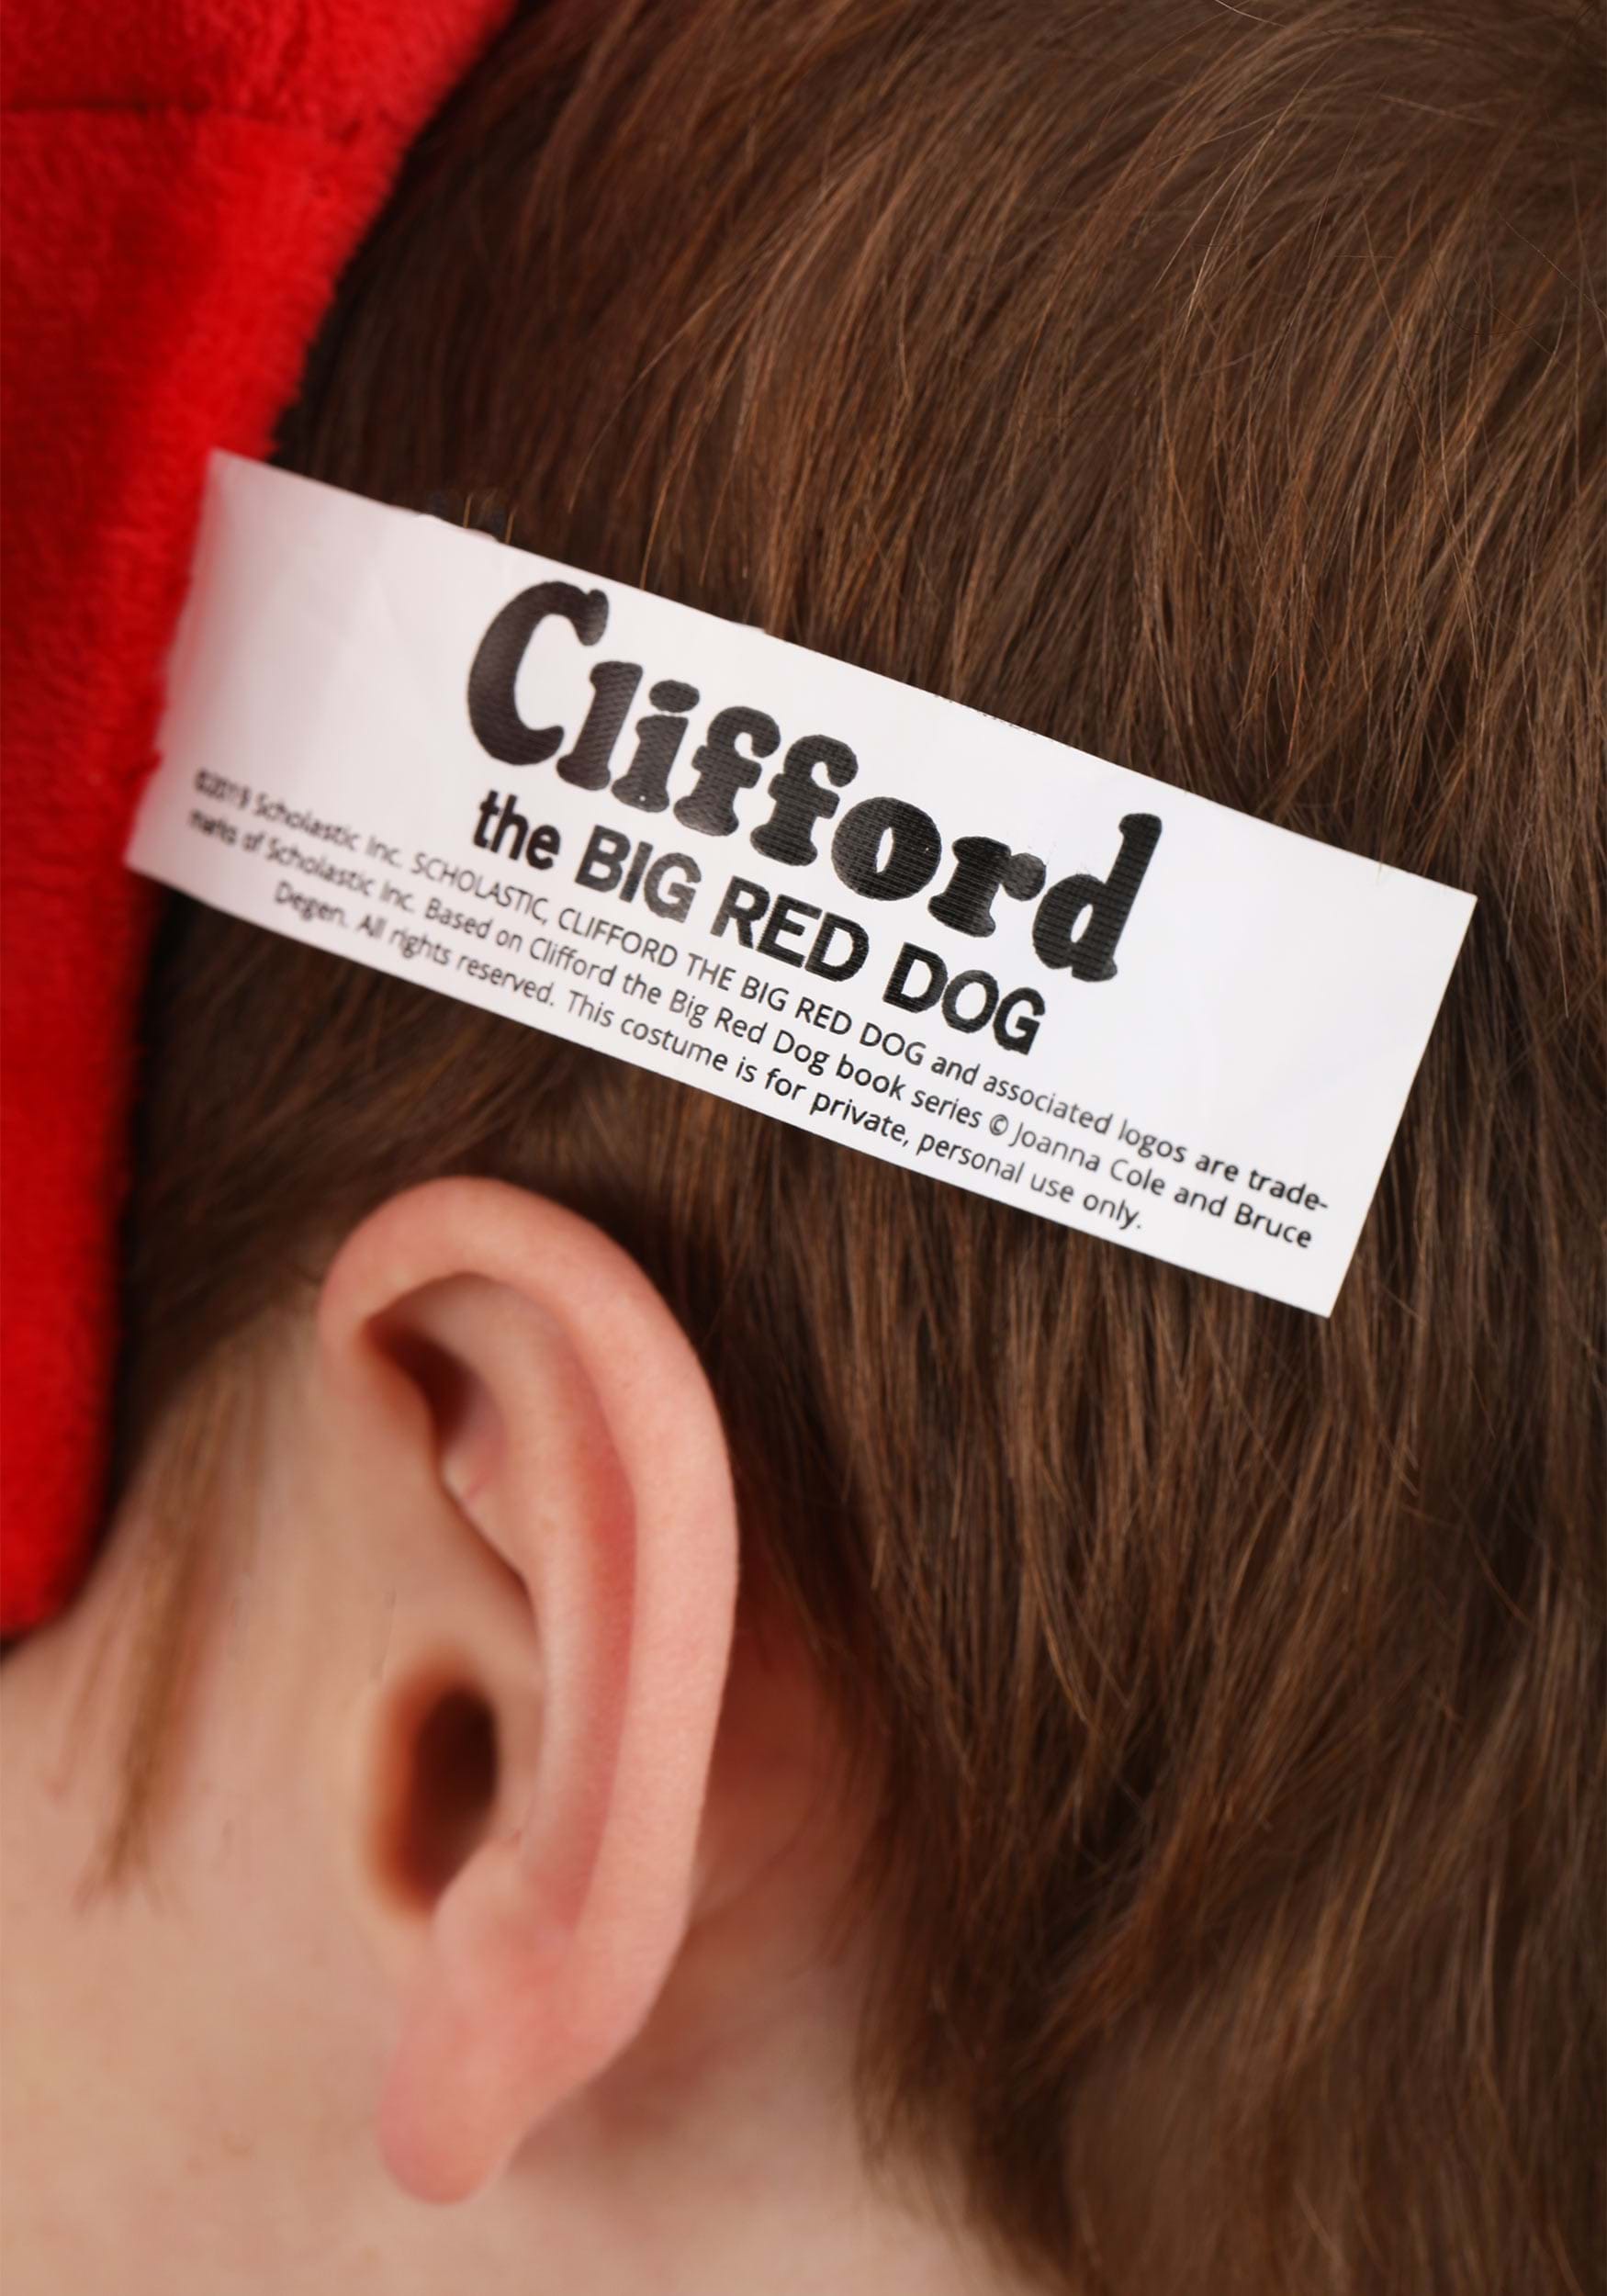 Clifford Face Headband Costume